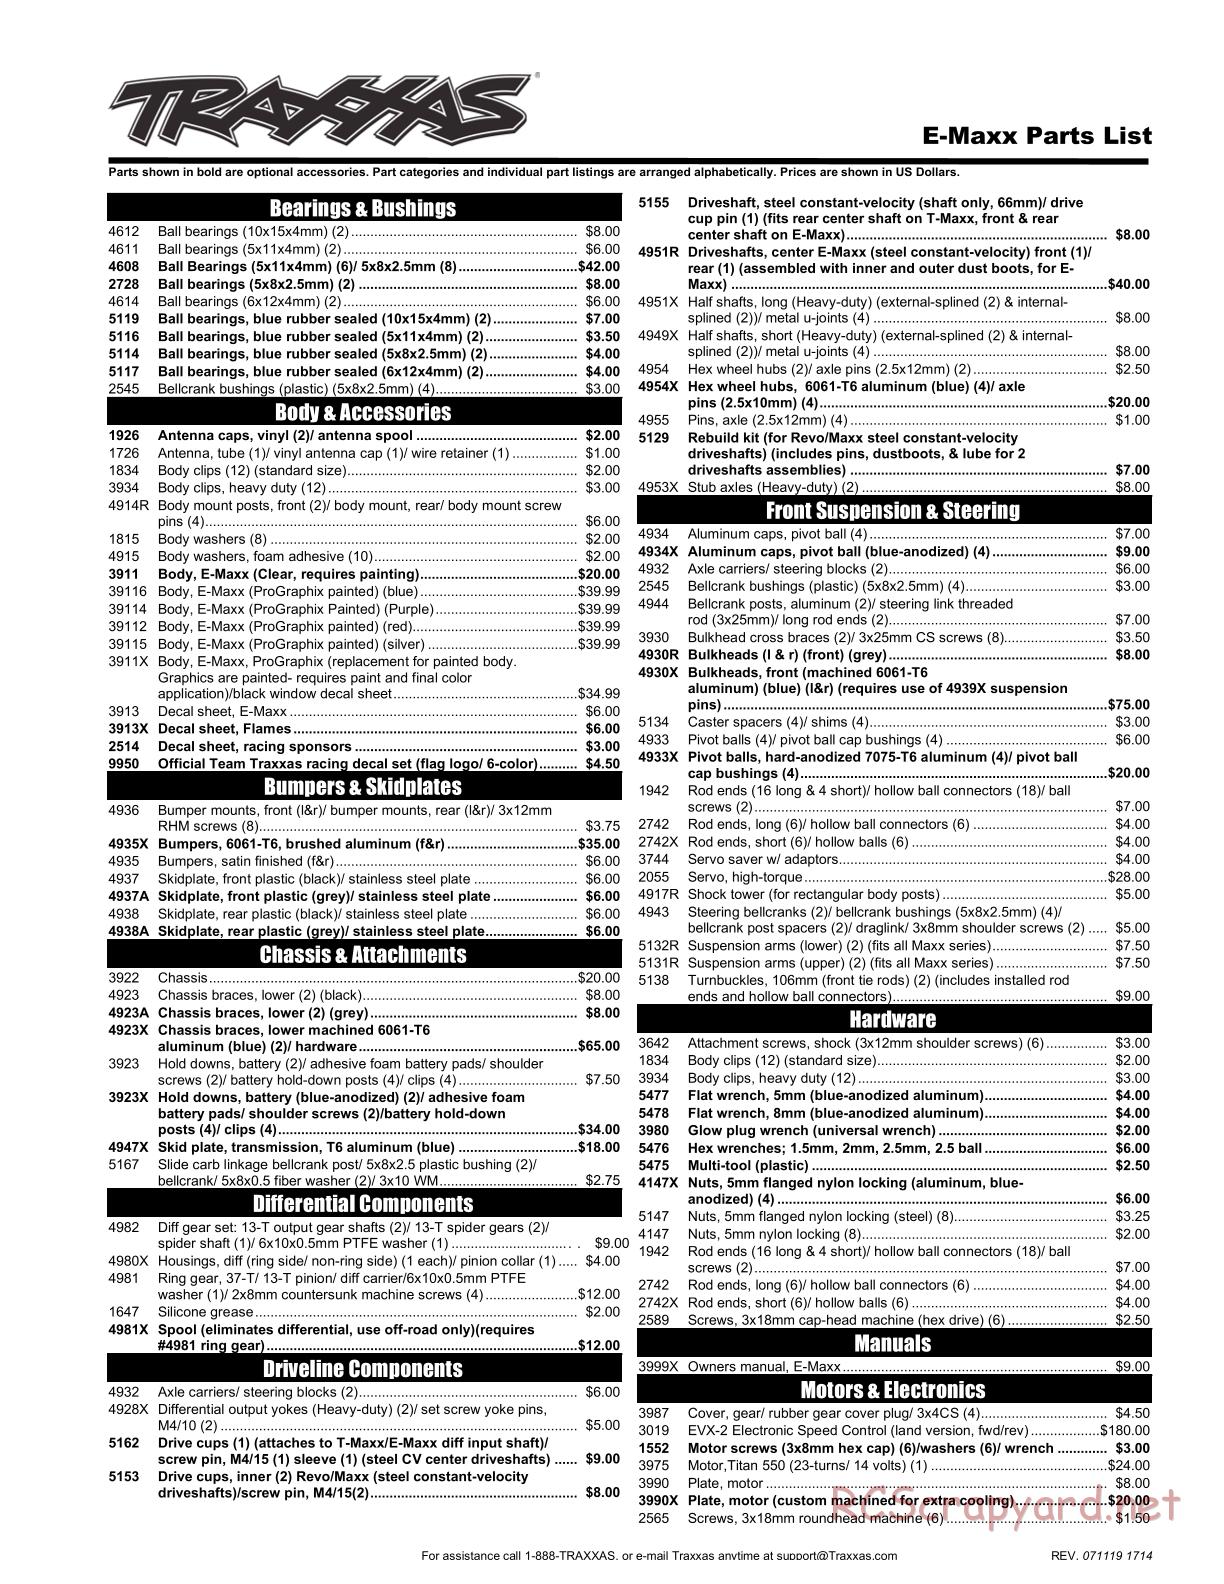 Traxxas - E-Maxx (2000) - Parts List - Page 1